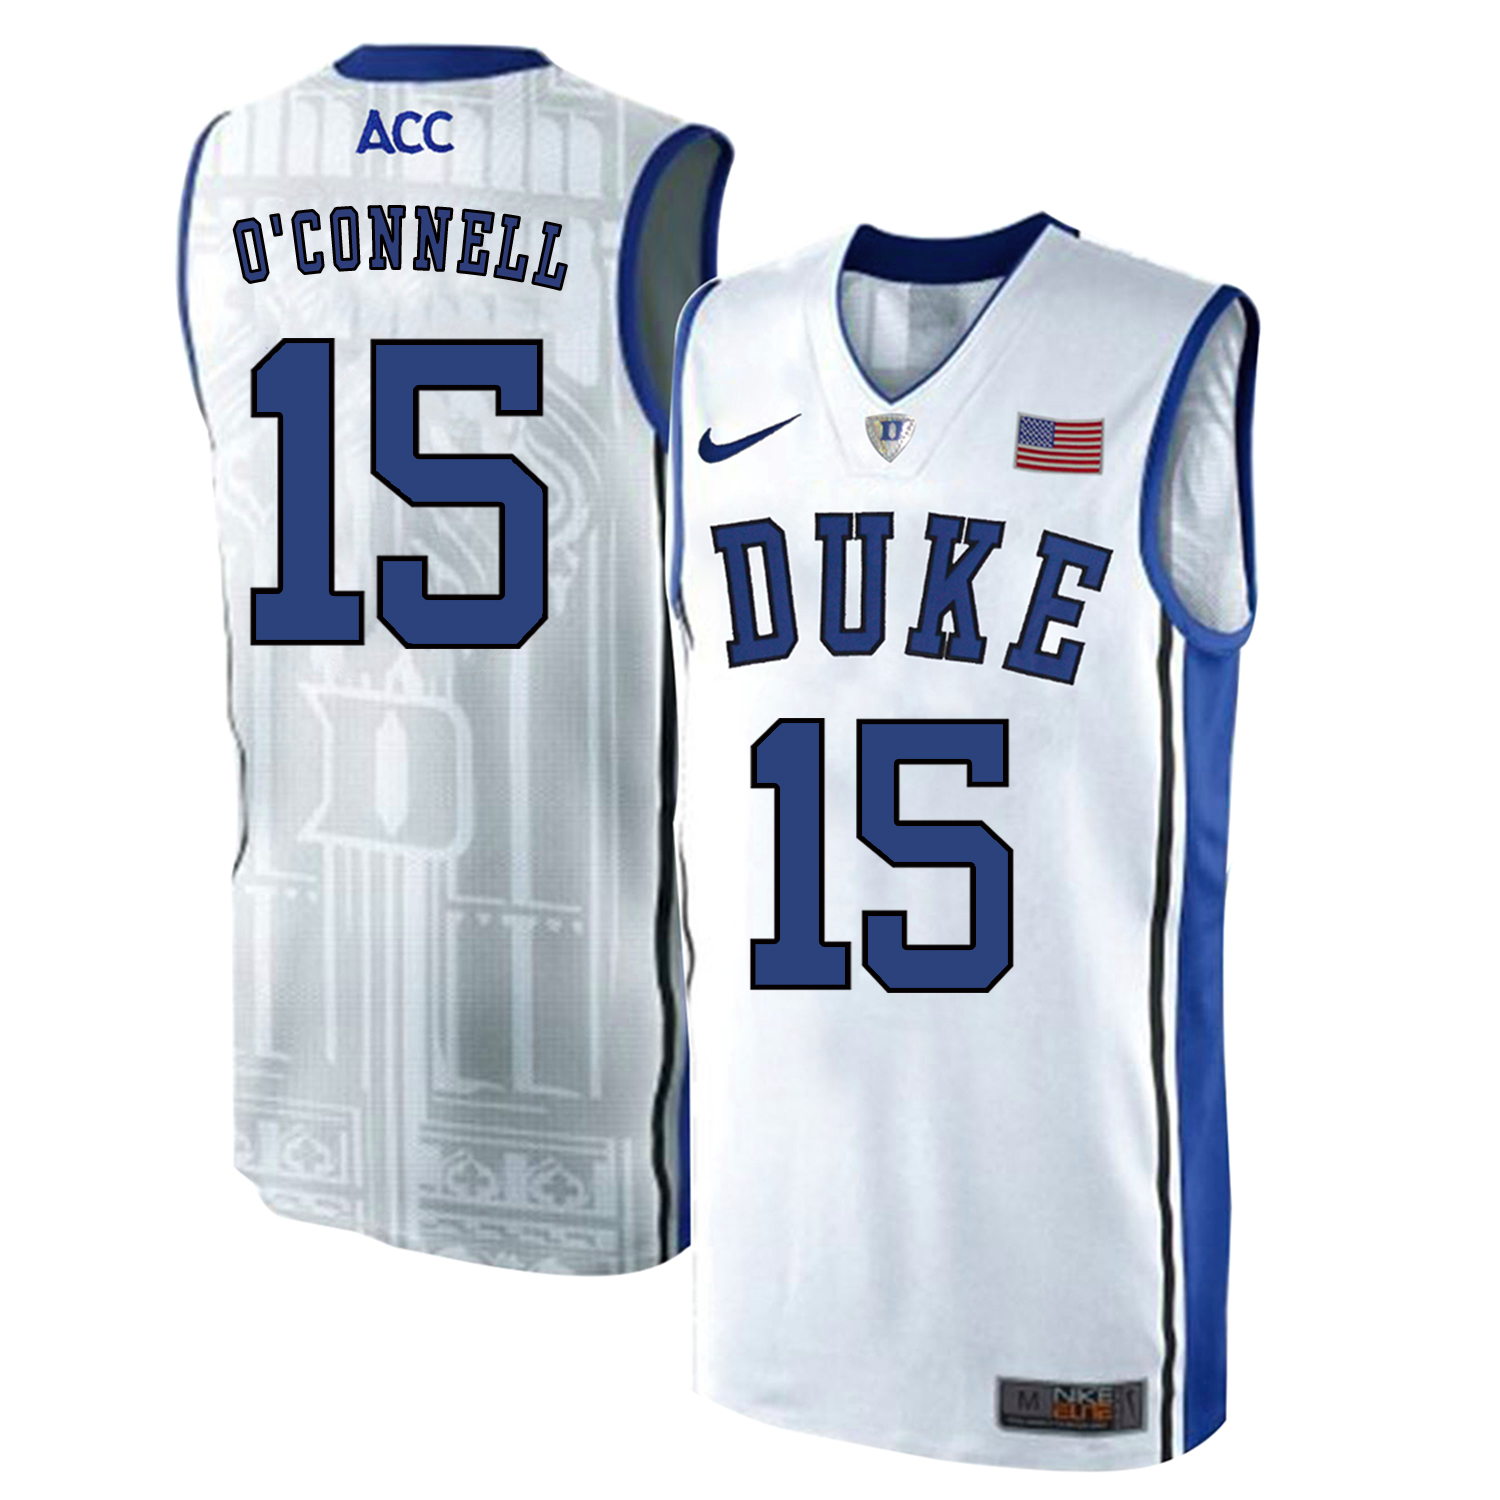 Duke Blue Devils 15 Alex O'Connell White Elite Nike College Basketball Jersey